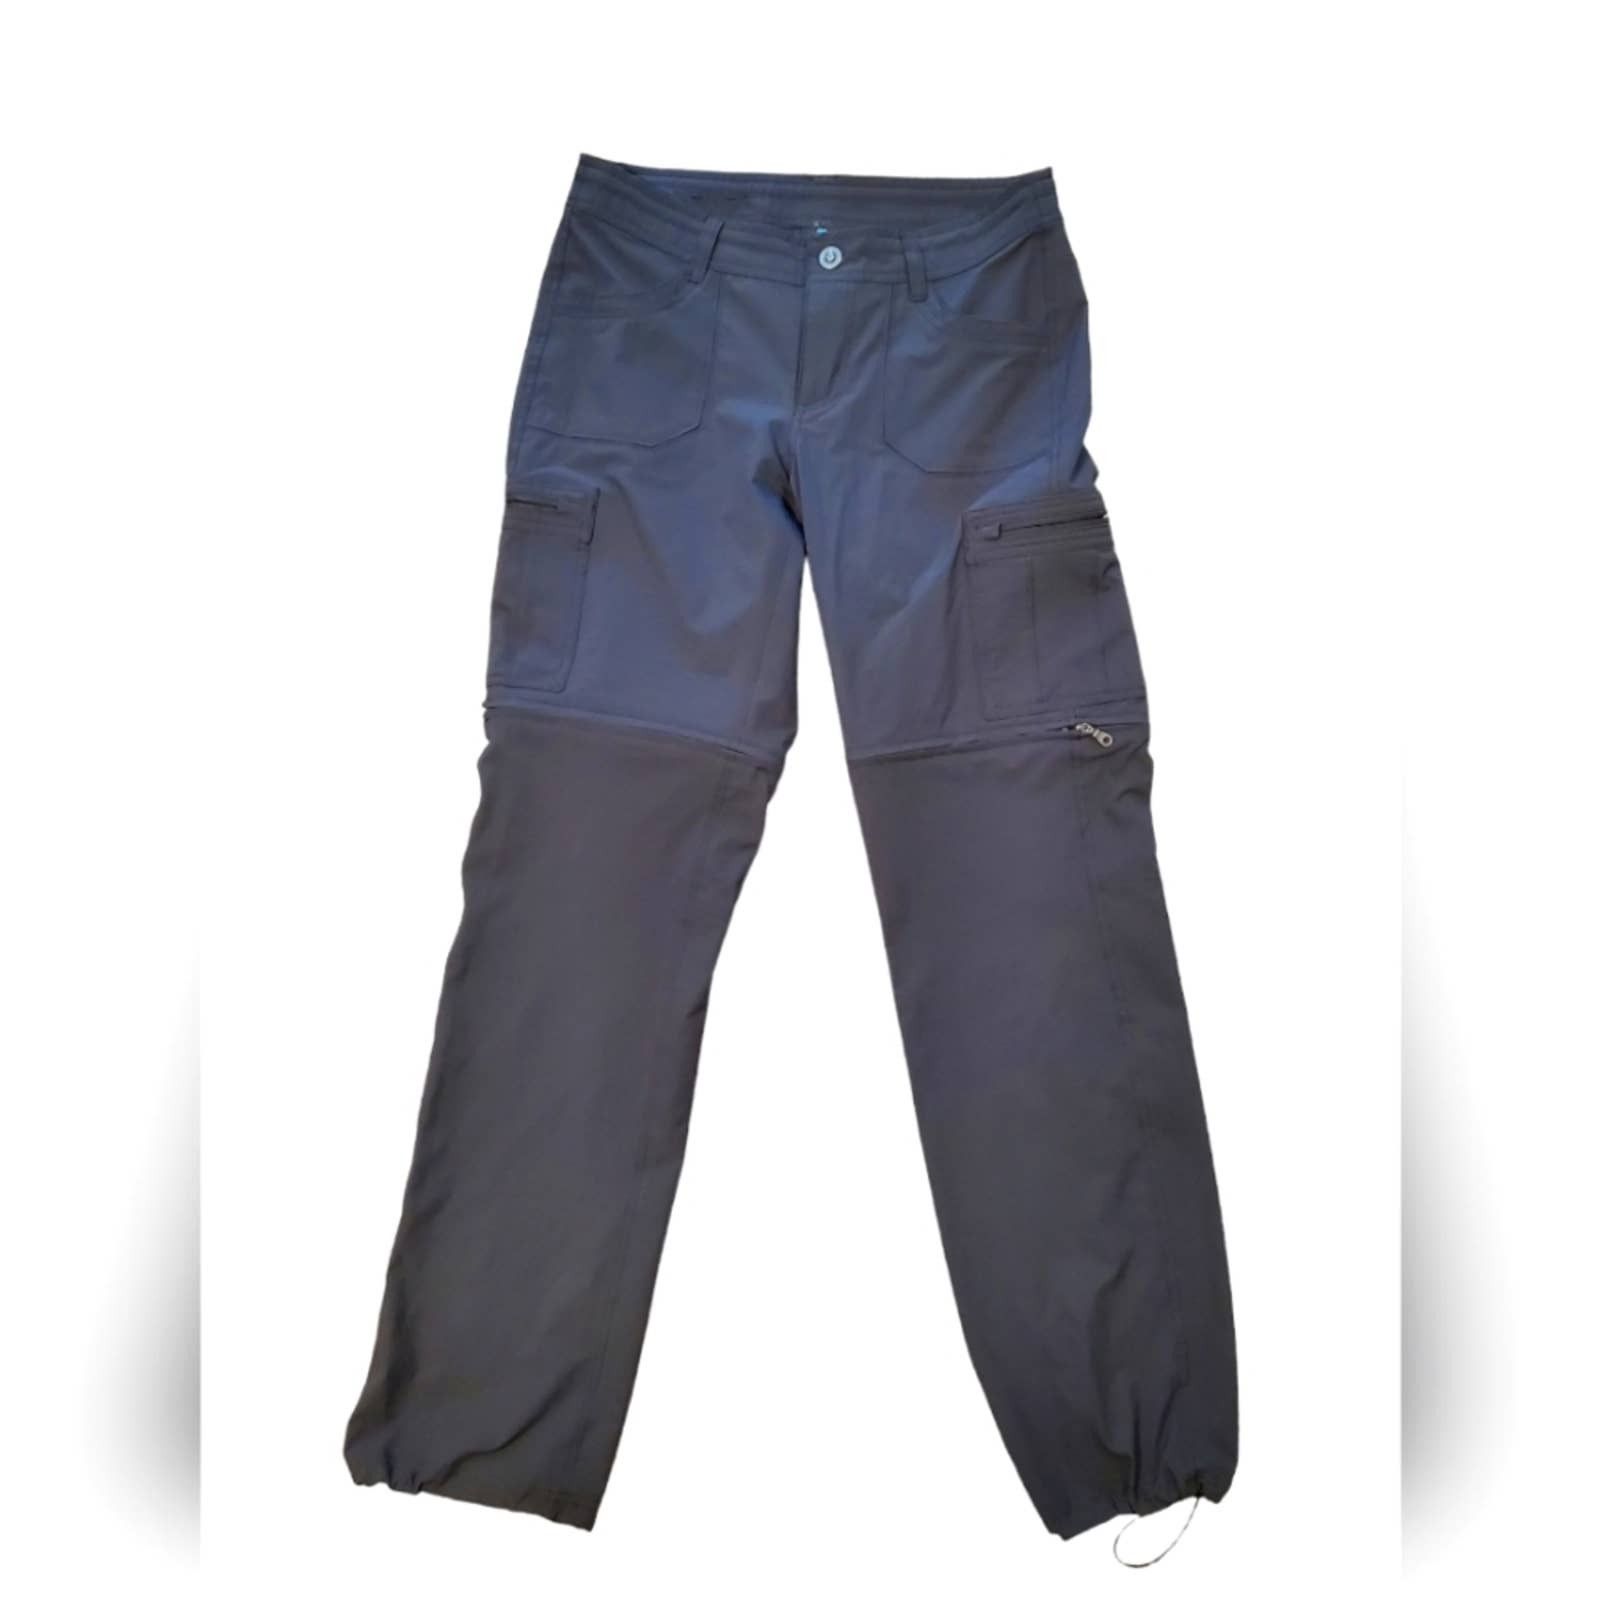 Kuhl Kuhl convertible grey / black hiking pants Sz 6